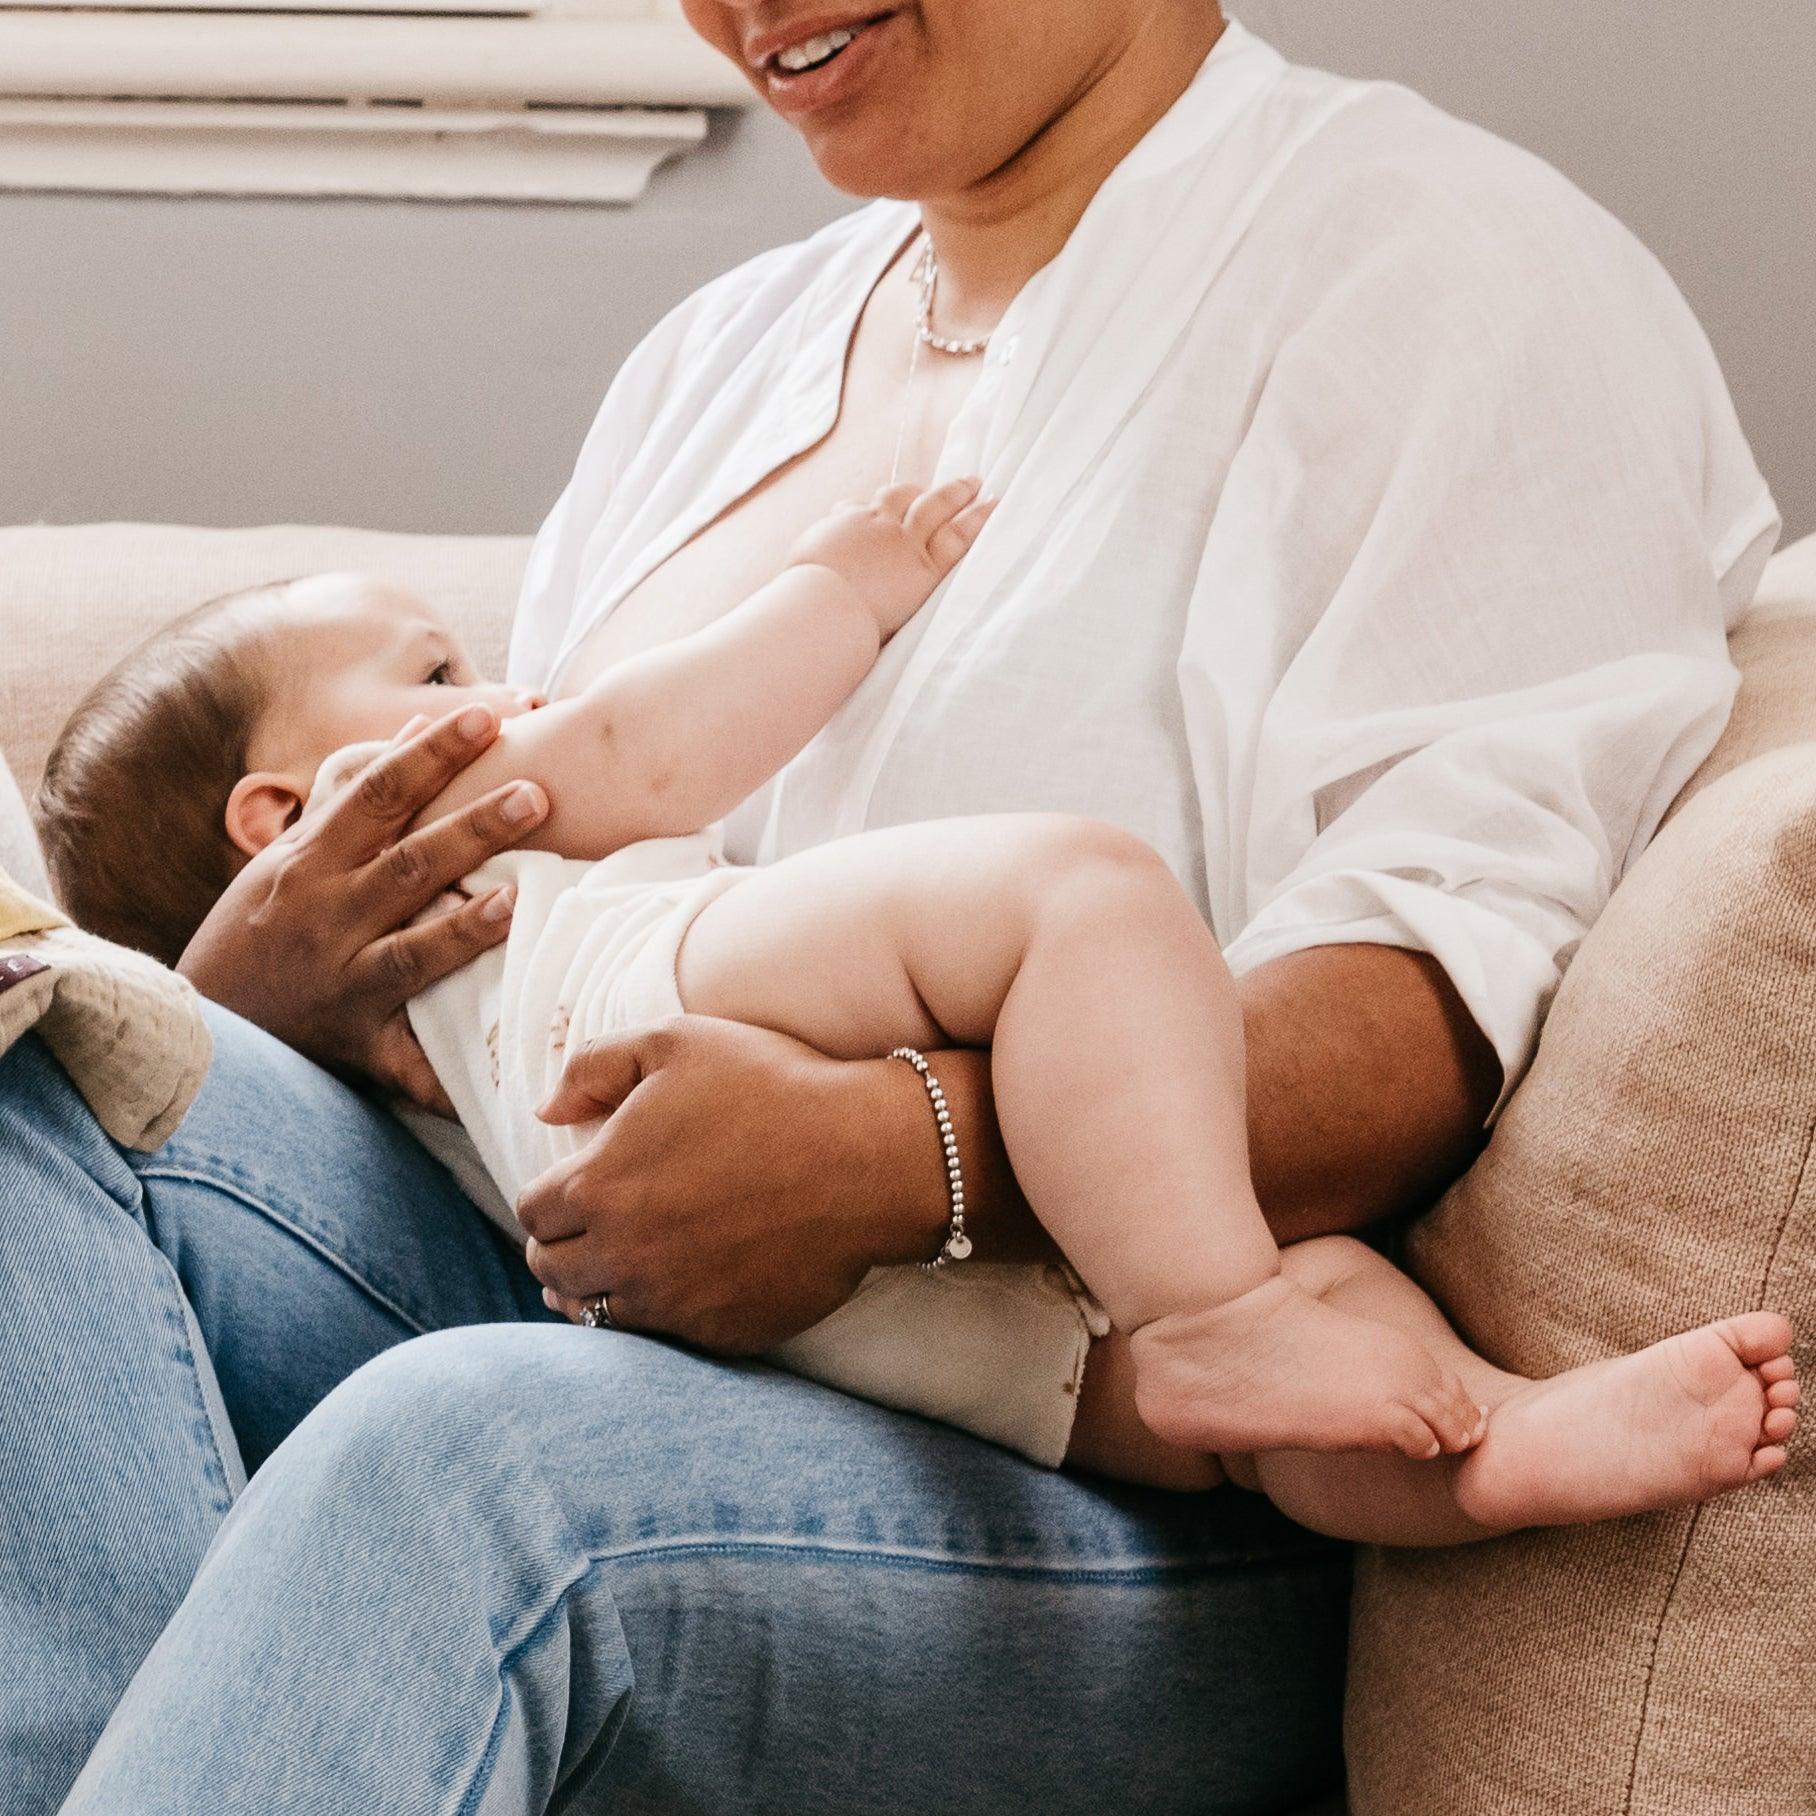 Breastfeeding: Weaning a Baby